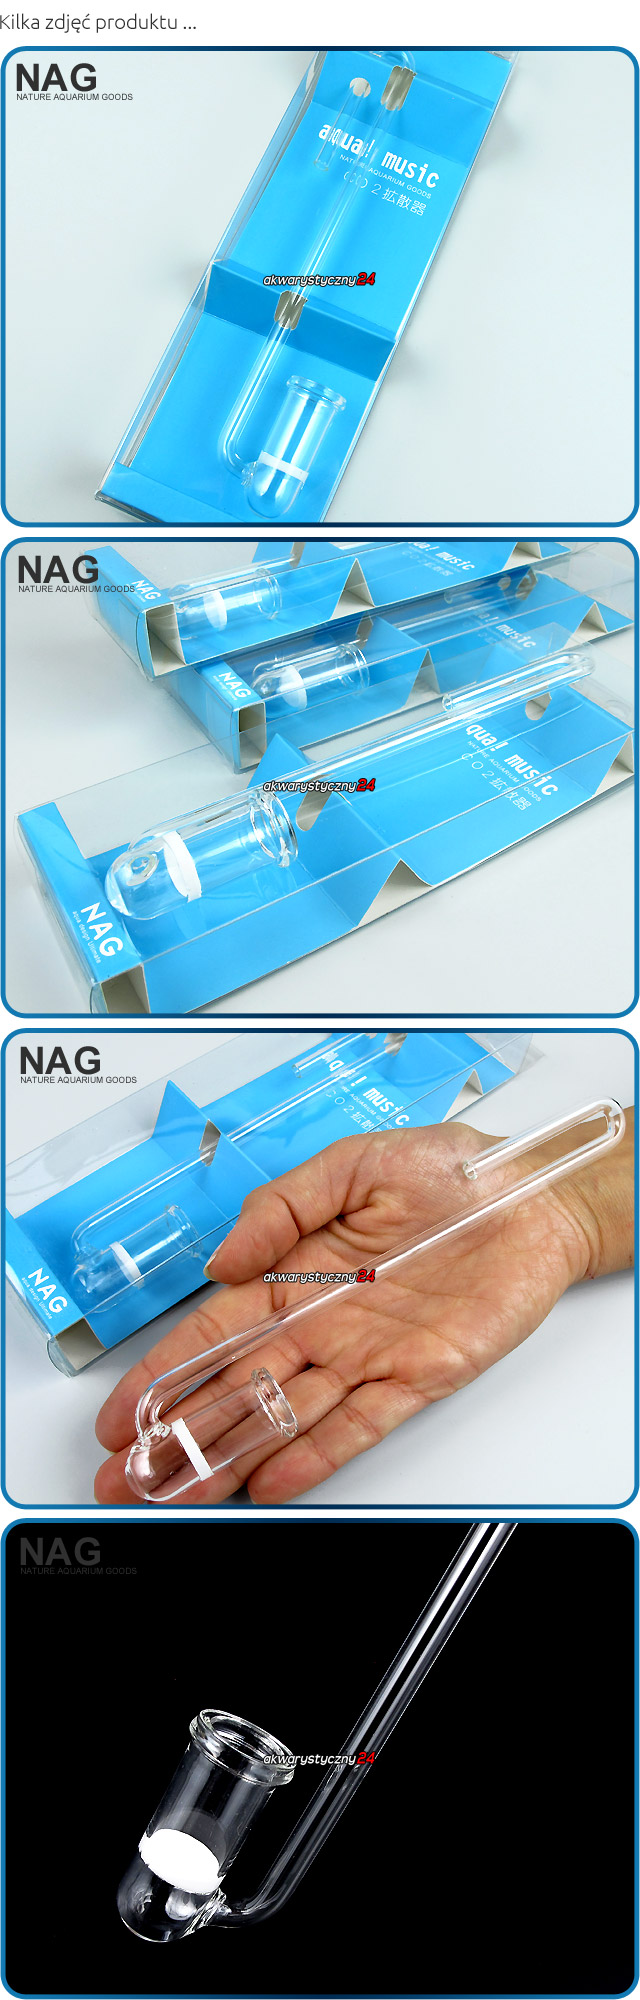 NAG Hang On Co2 Diffuser (Type I) - Dyfuzor CO2 wieszany na szybę